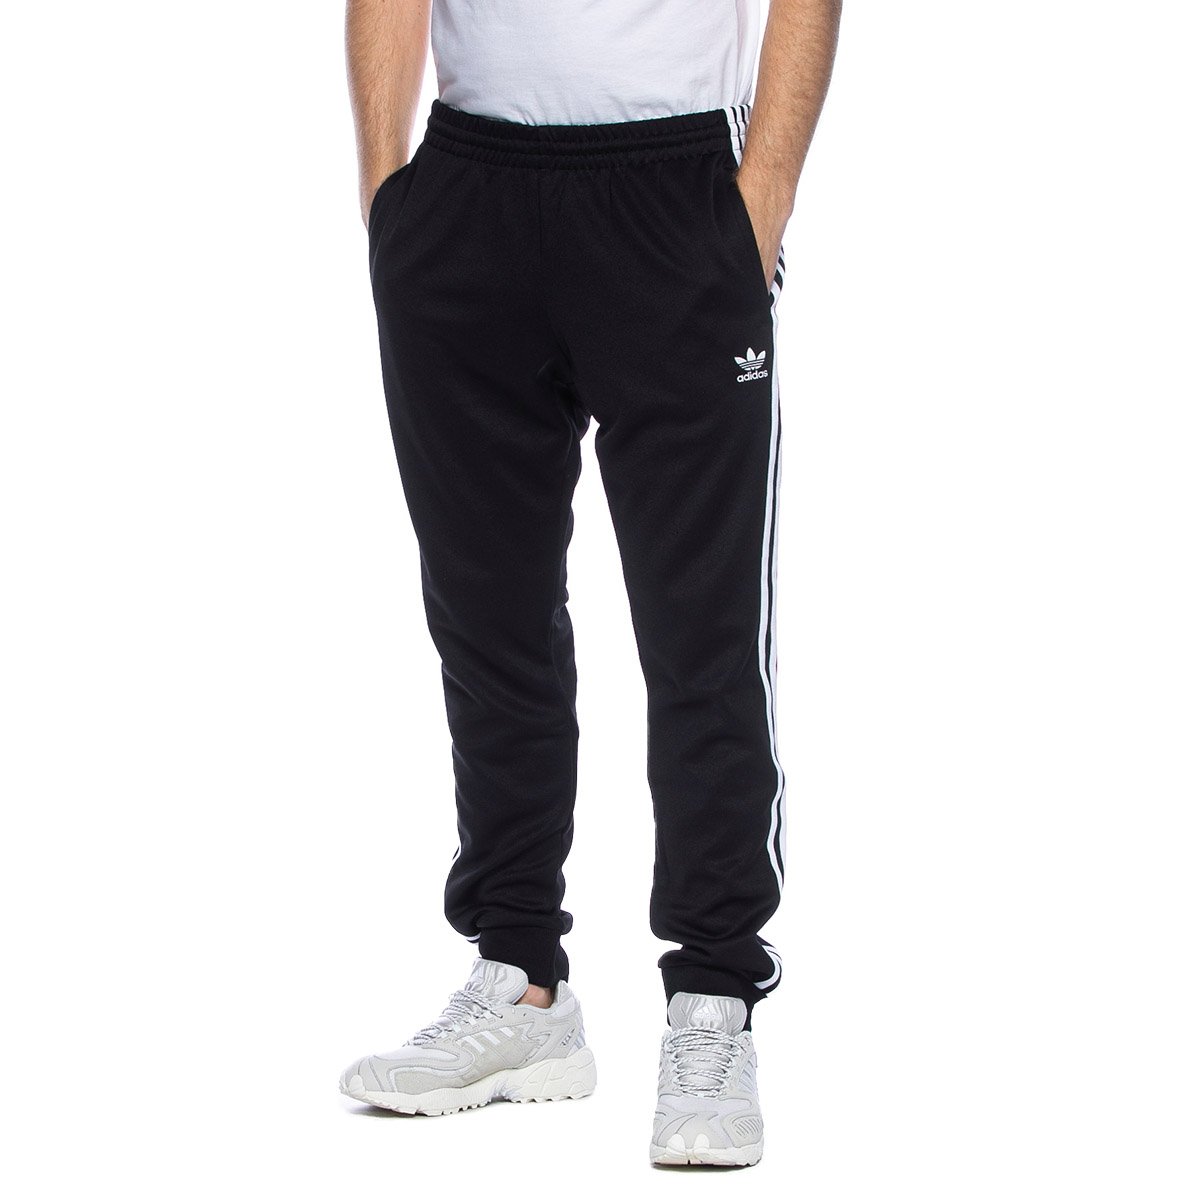 Adidas Originals sweatpants SST Track Pants black | Bludshop.com